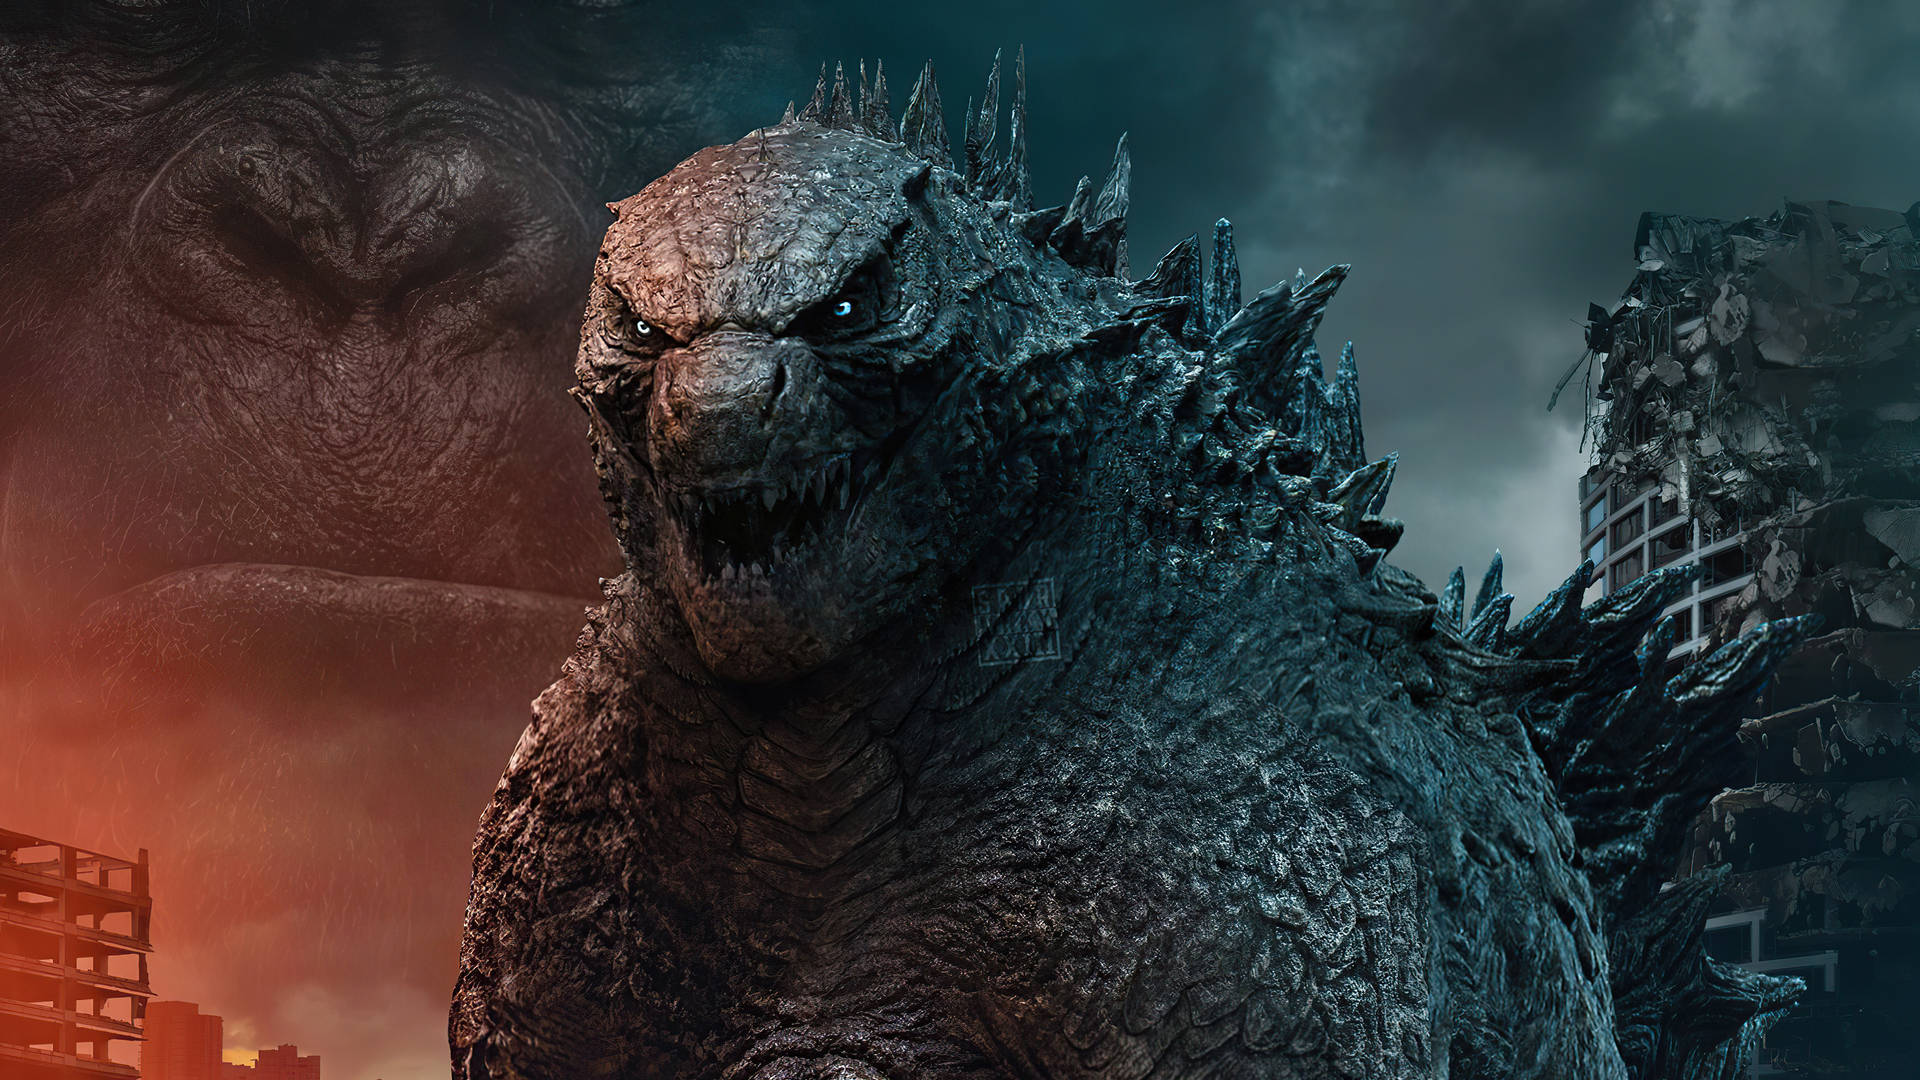 Godzillavs King Kong - Fondo De Pantalla En Hd. Fondo de pantalla